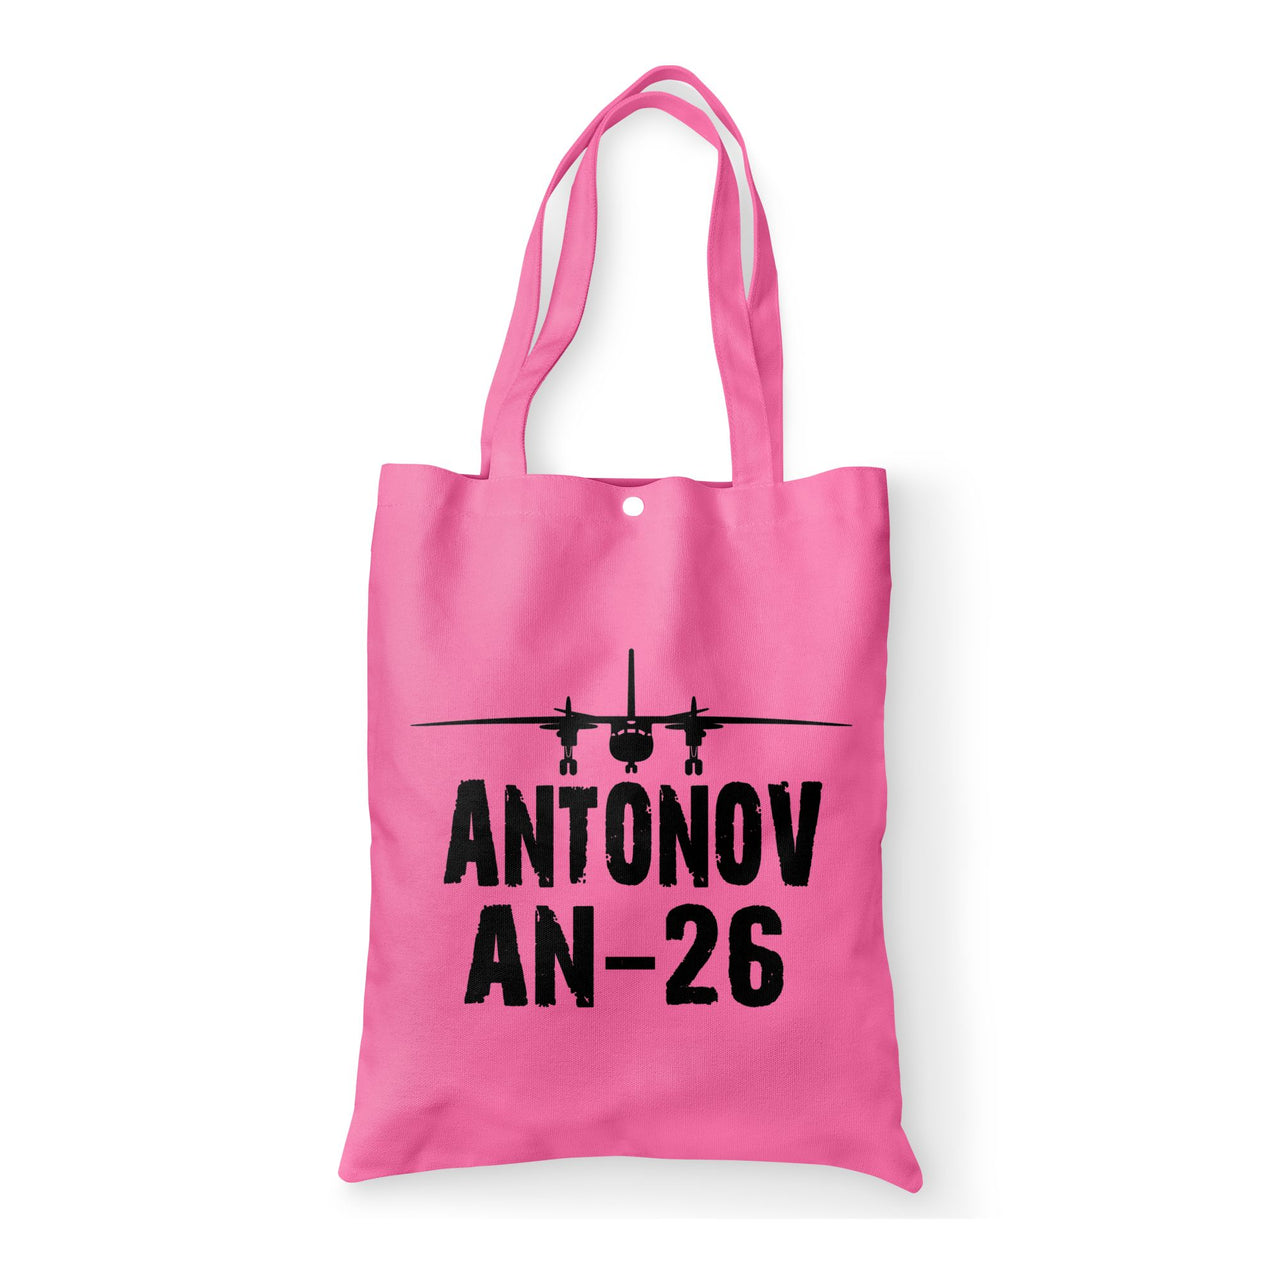 Antonov AN-26 & Plane Designed Tote Bags